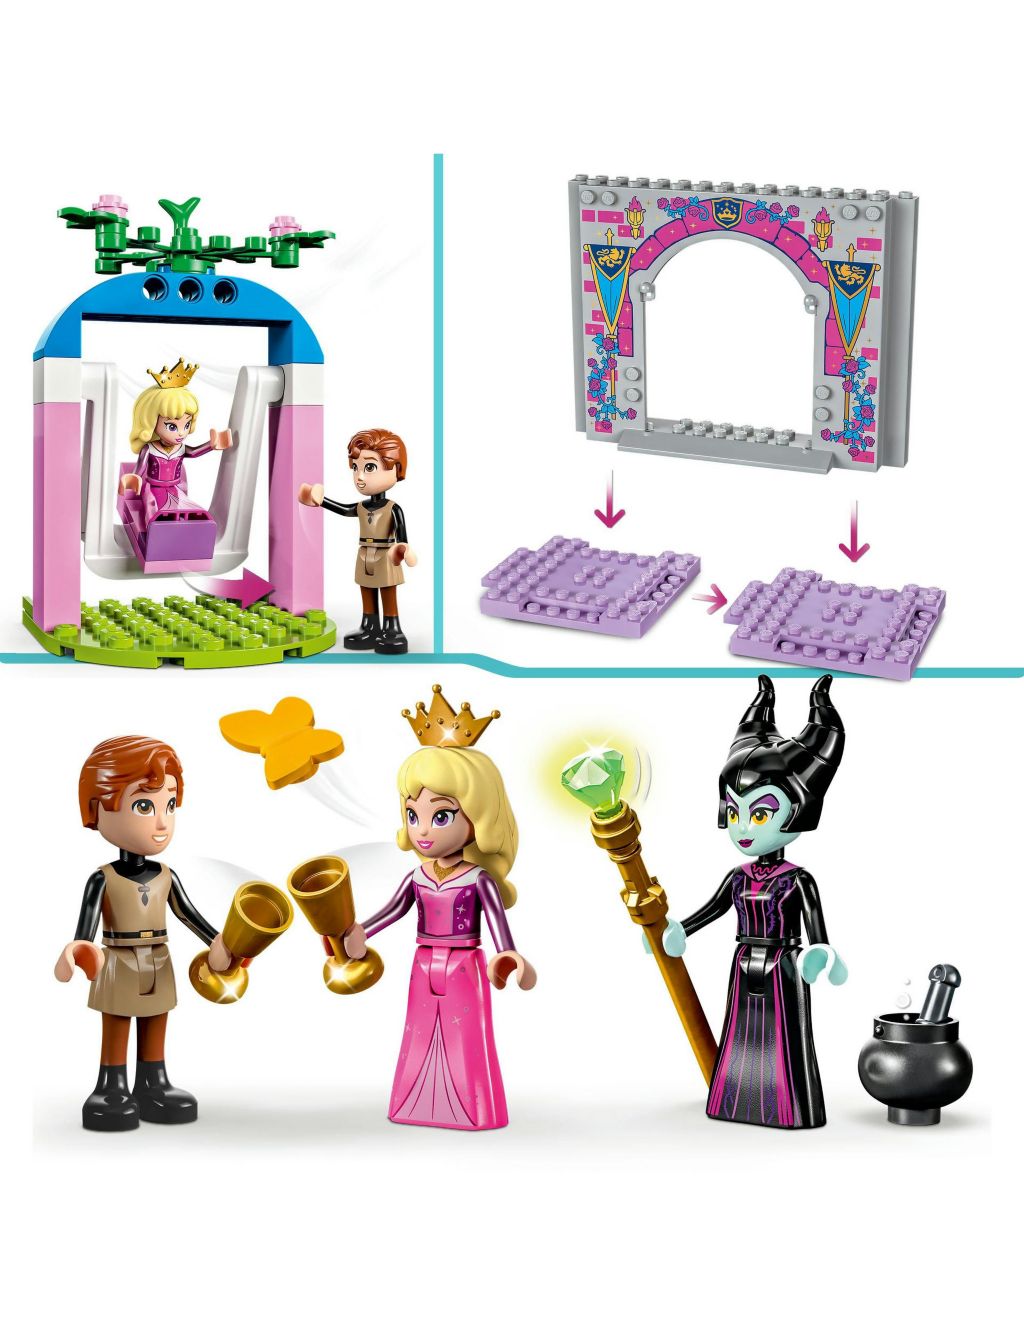 LEGO|Disney Princess Aurora's Castle Set 43211 (4+ Yrs) | Lego | M&S